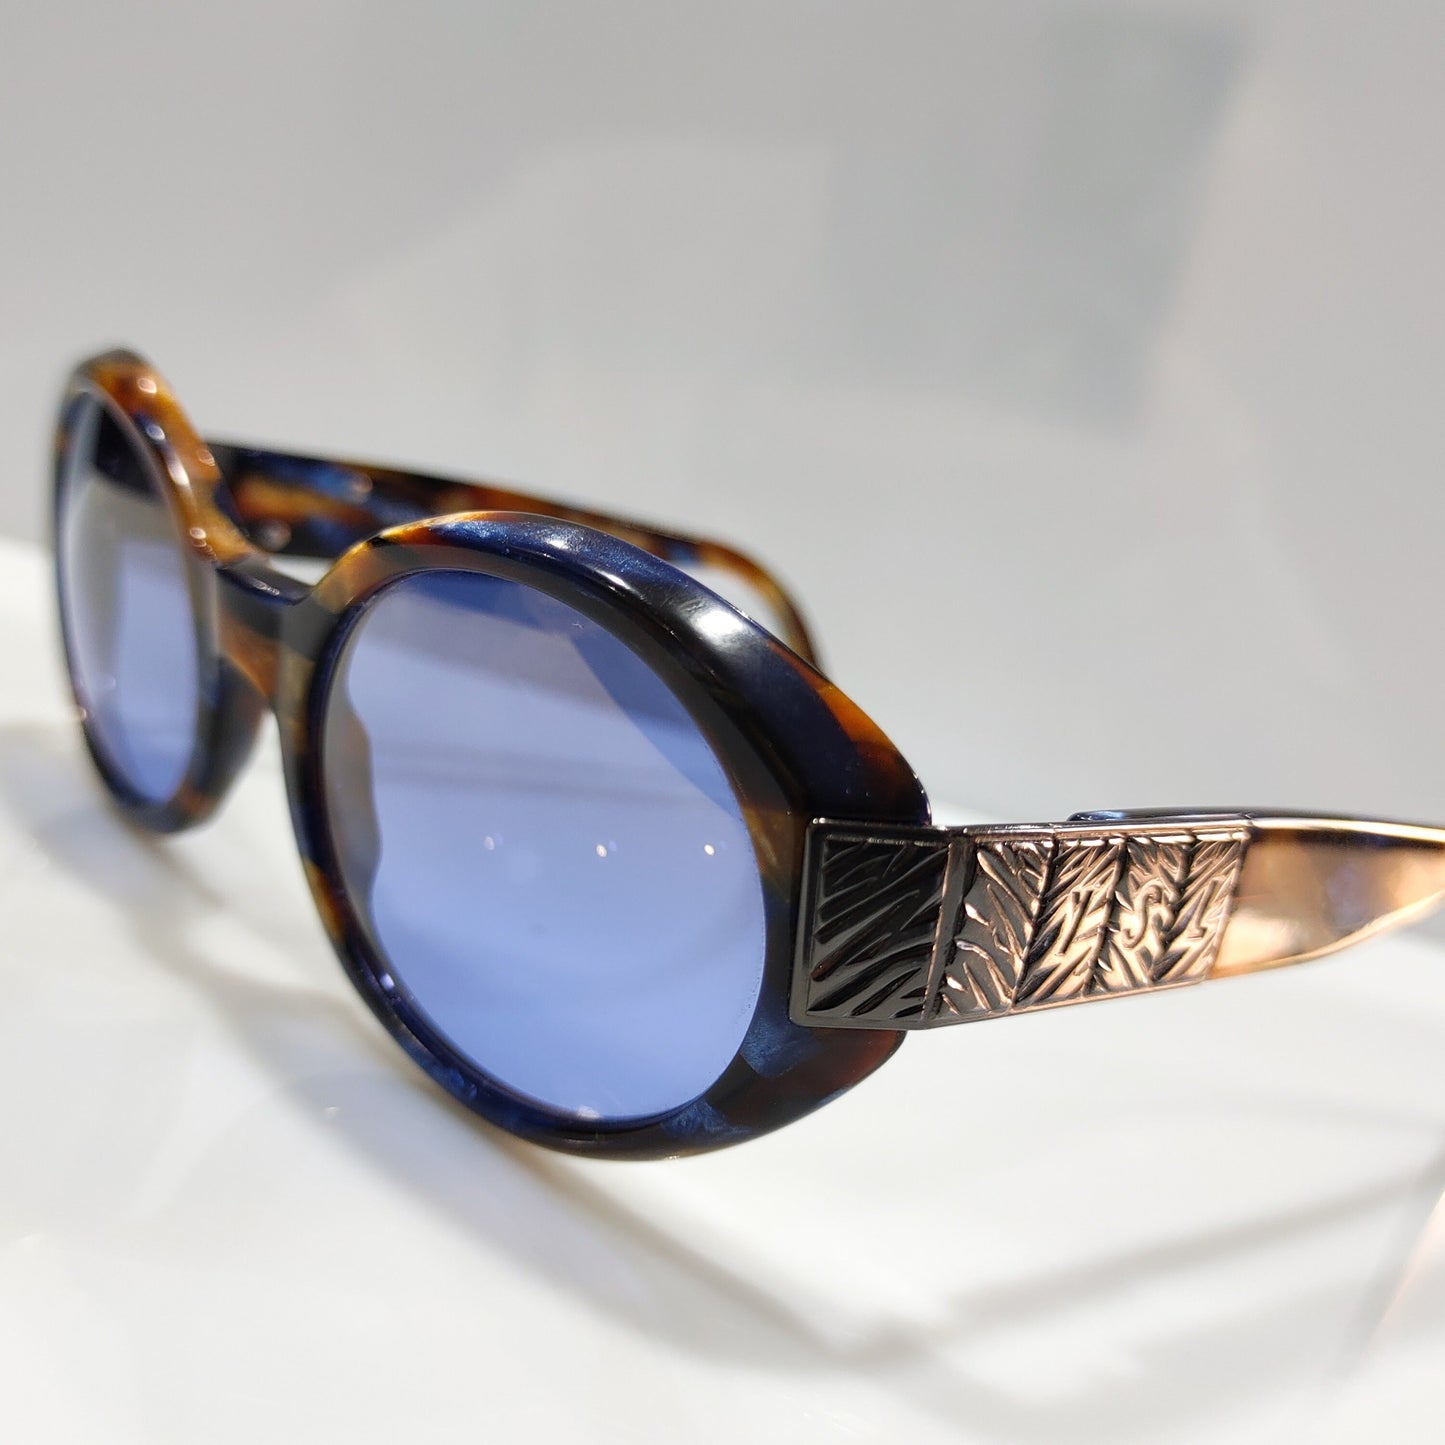 Yves Saint Laurent 6548 occhiali da sole vintage occhiali lunetta brille anni '90